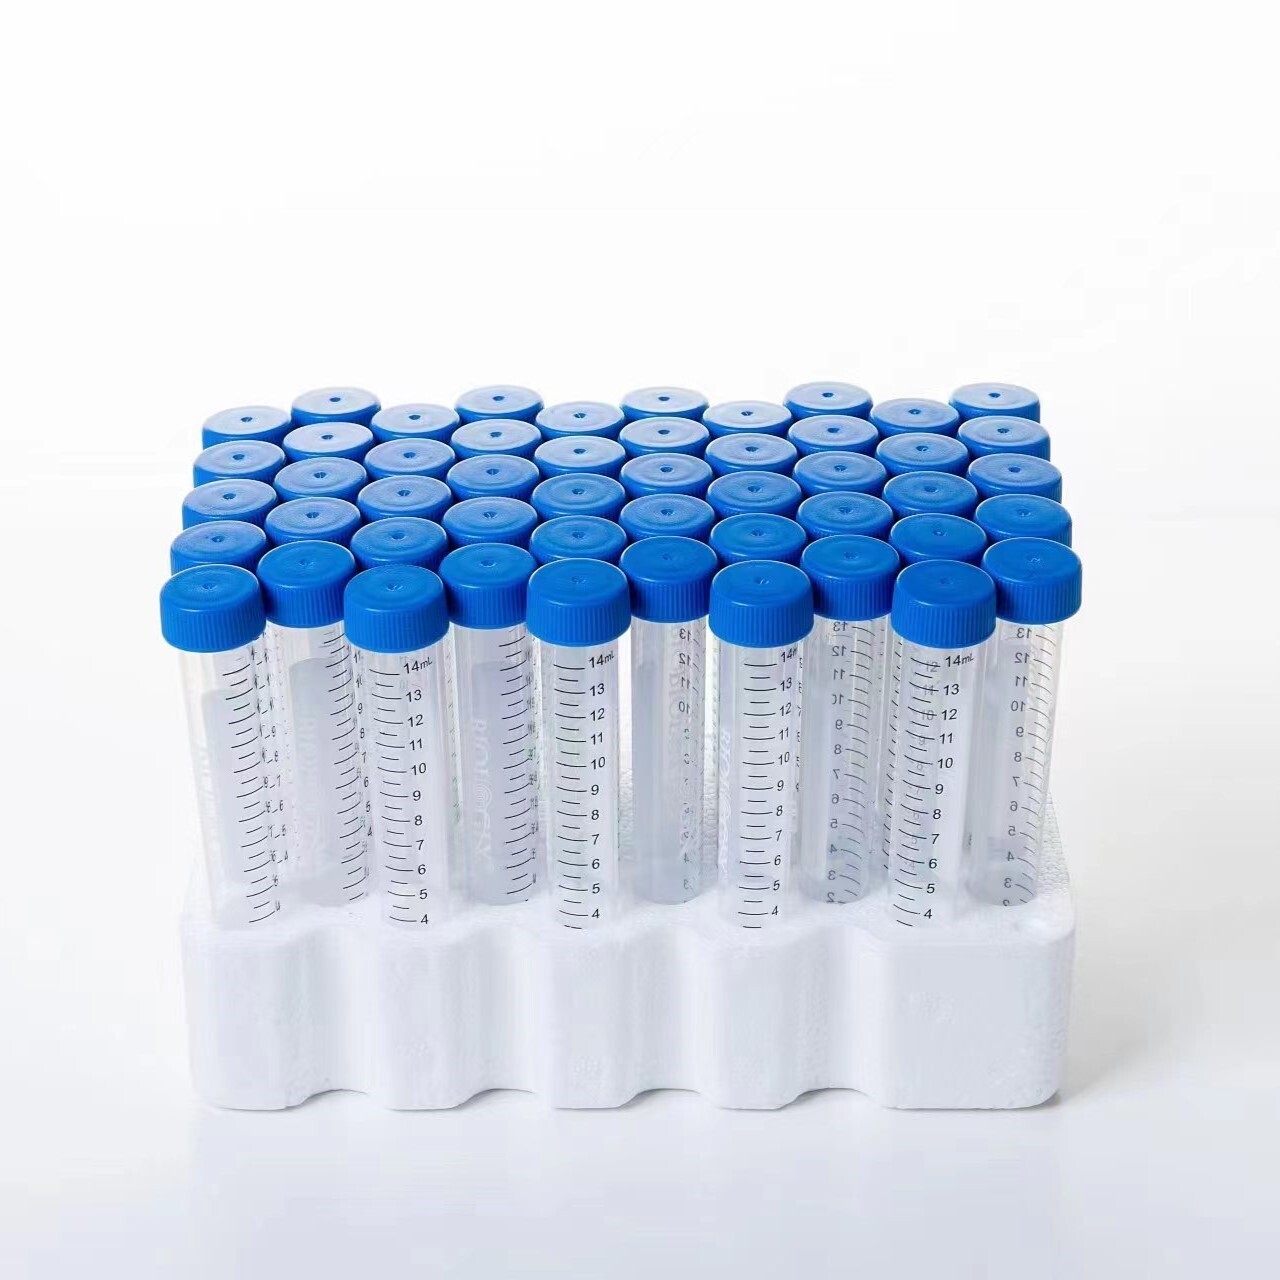 Biologix Centrifuge Tubes-15mL, Conical Bottom, Rack Pack, 50 Tubes/Rack, 10 Racks/Case